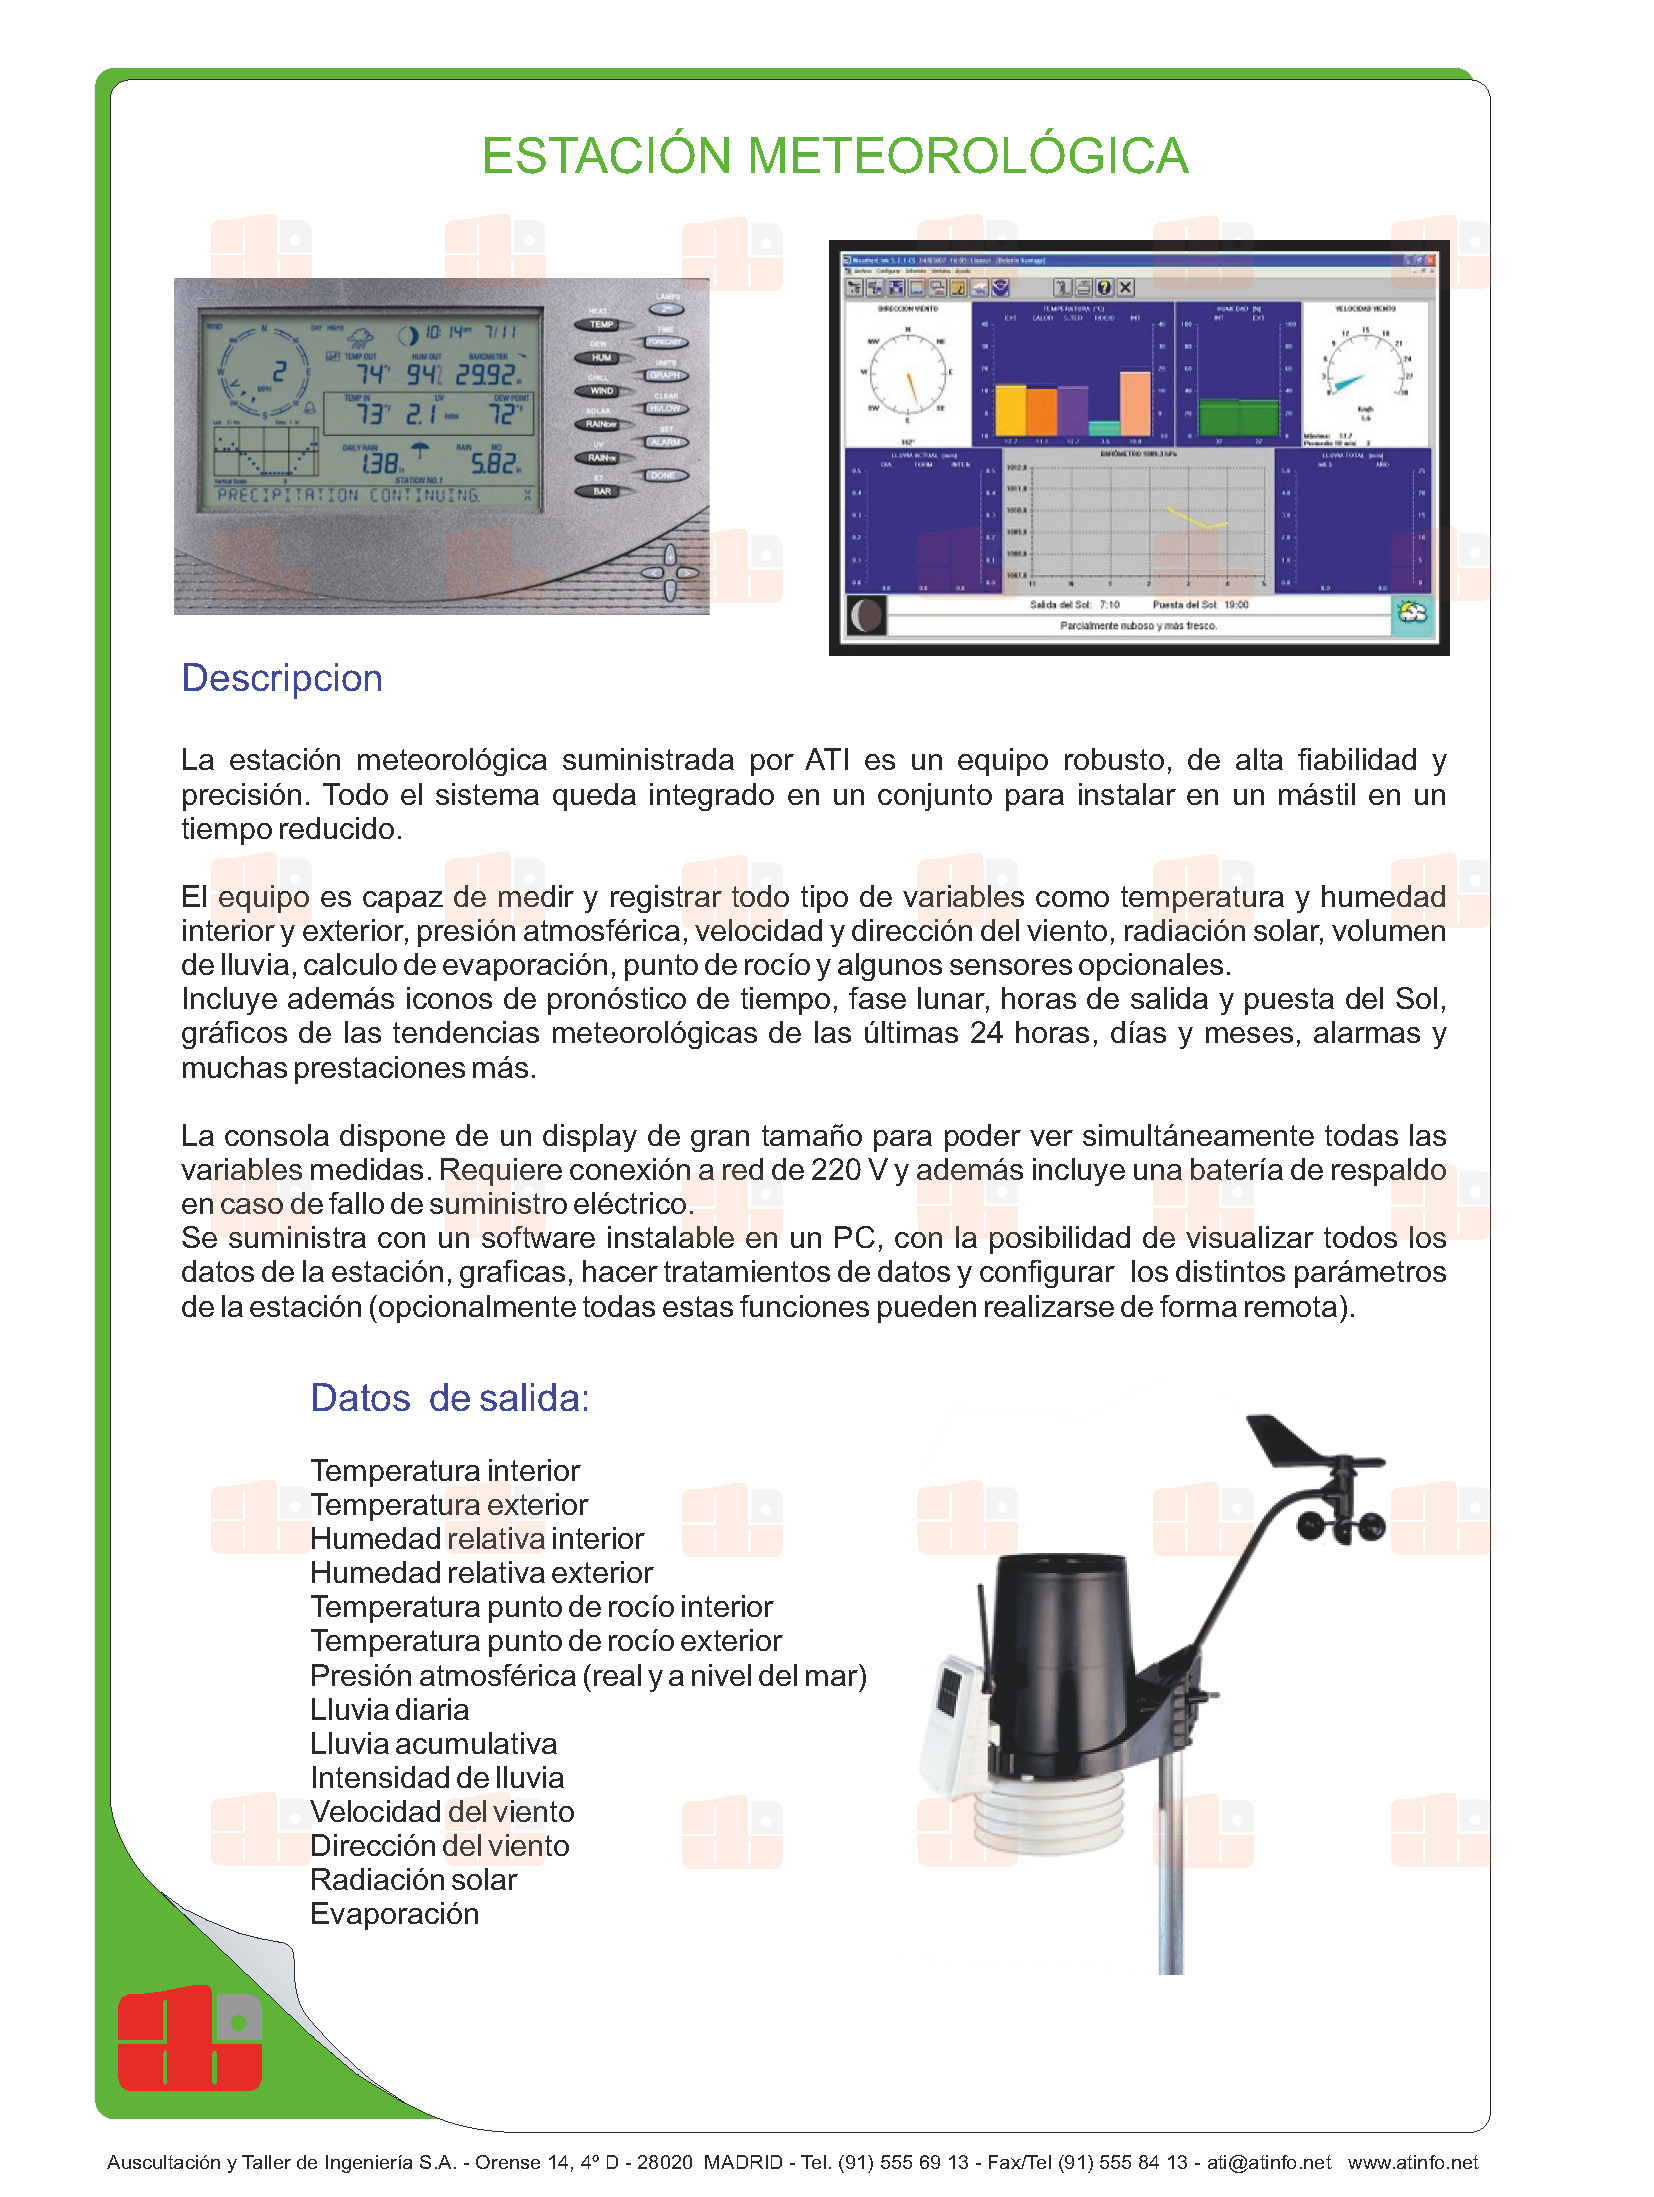 auscultacion-ingenieria-atinfo-automatización-estacion-meteorologica